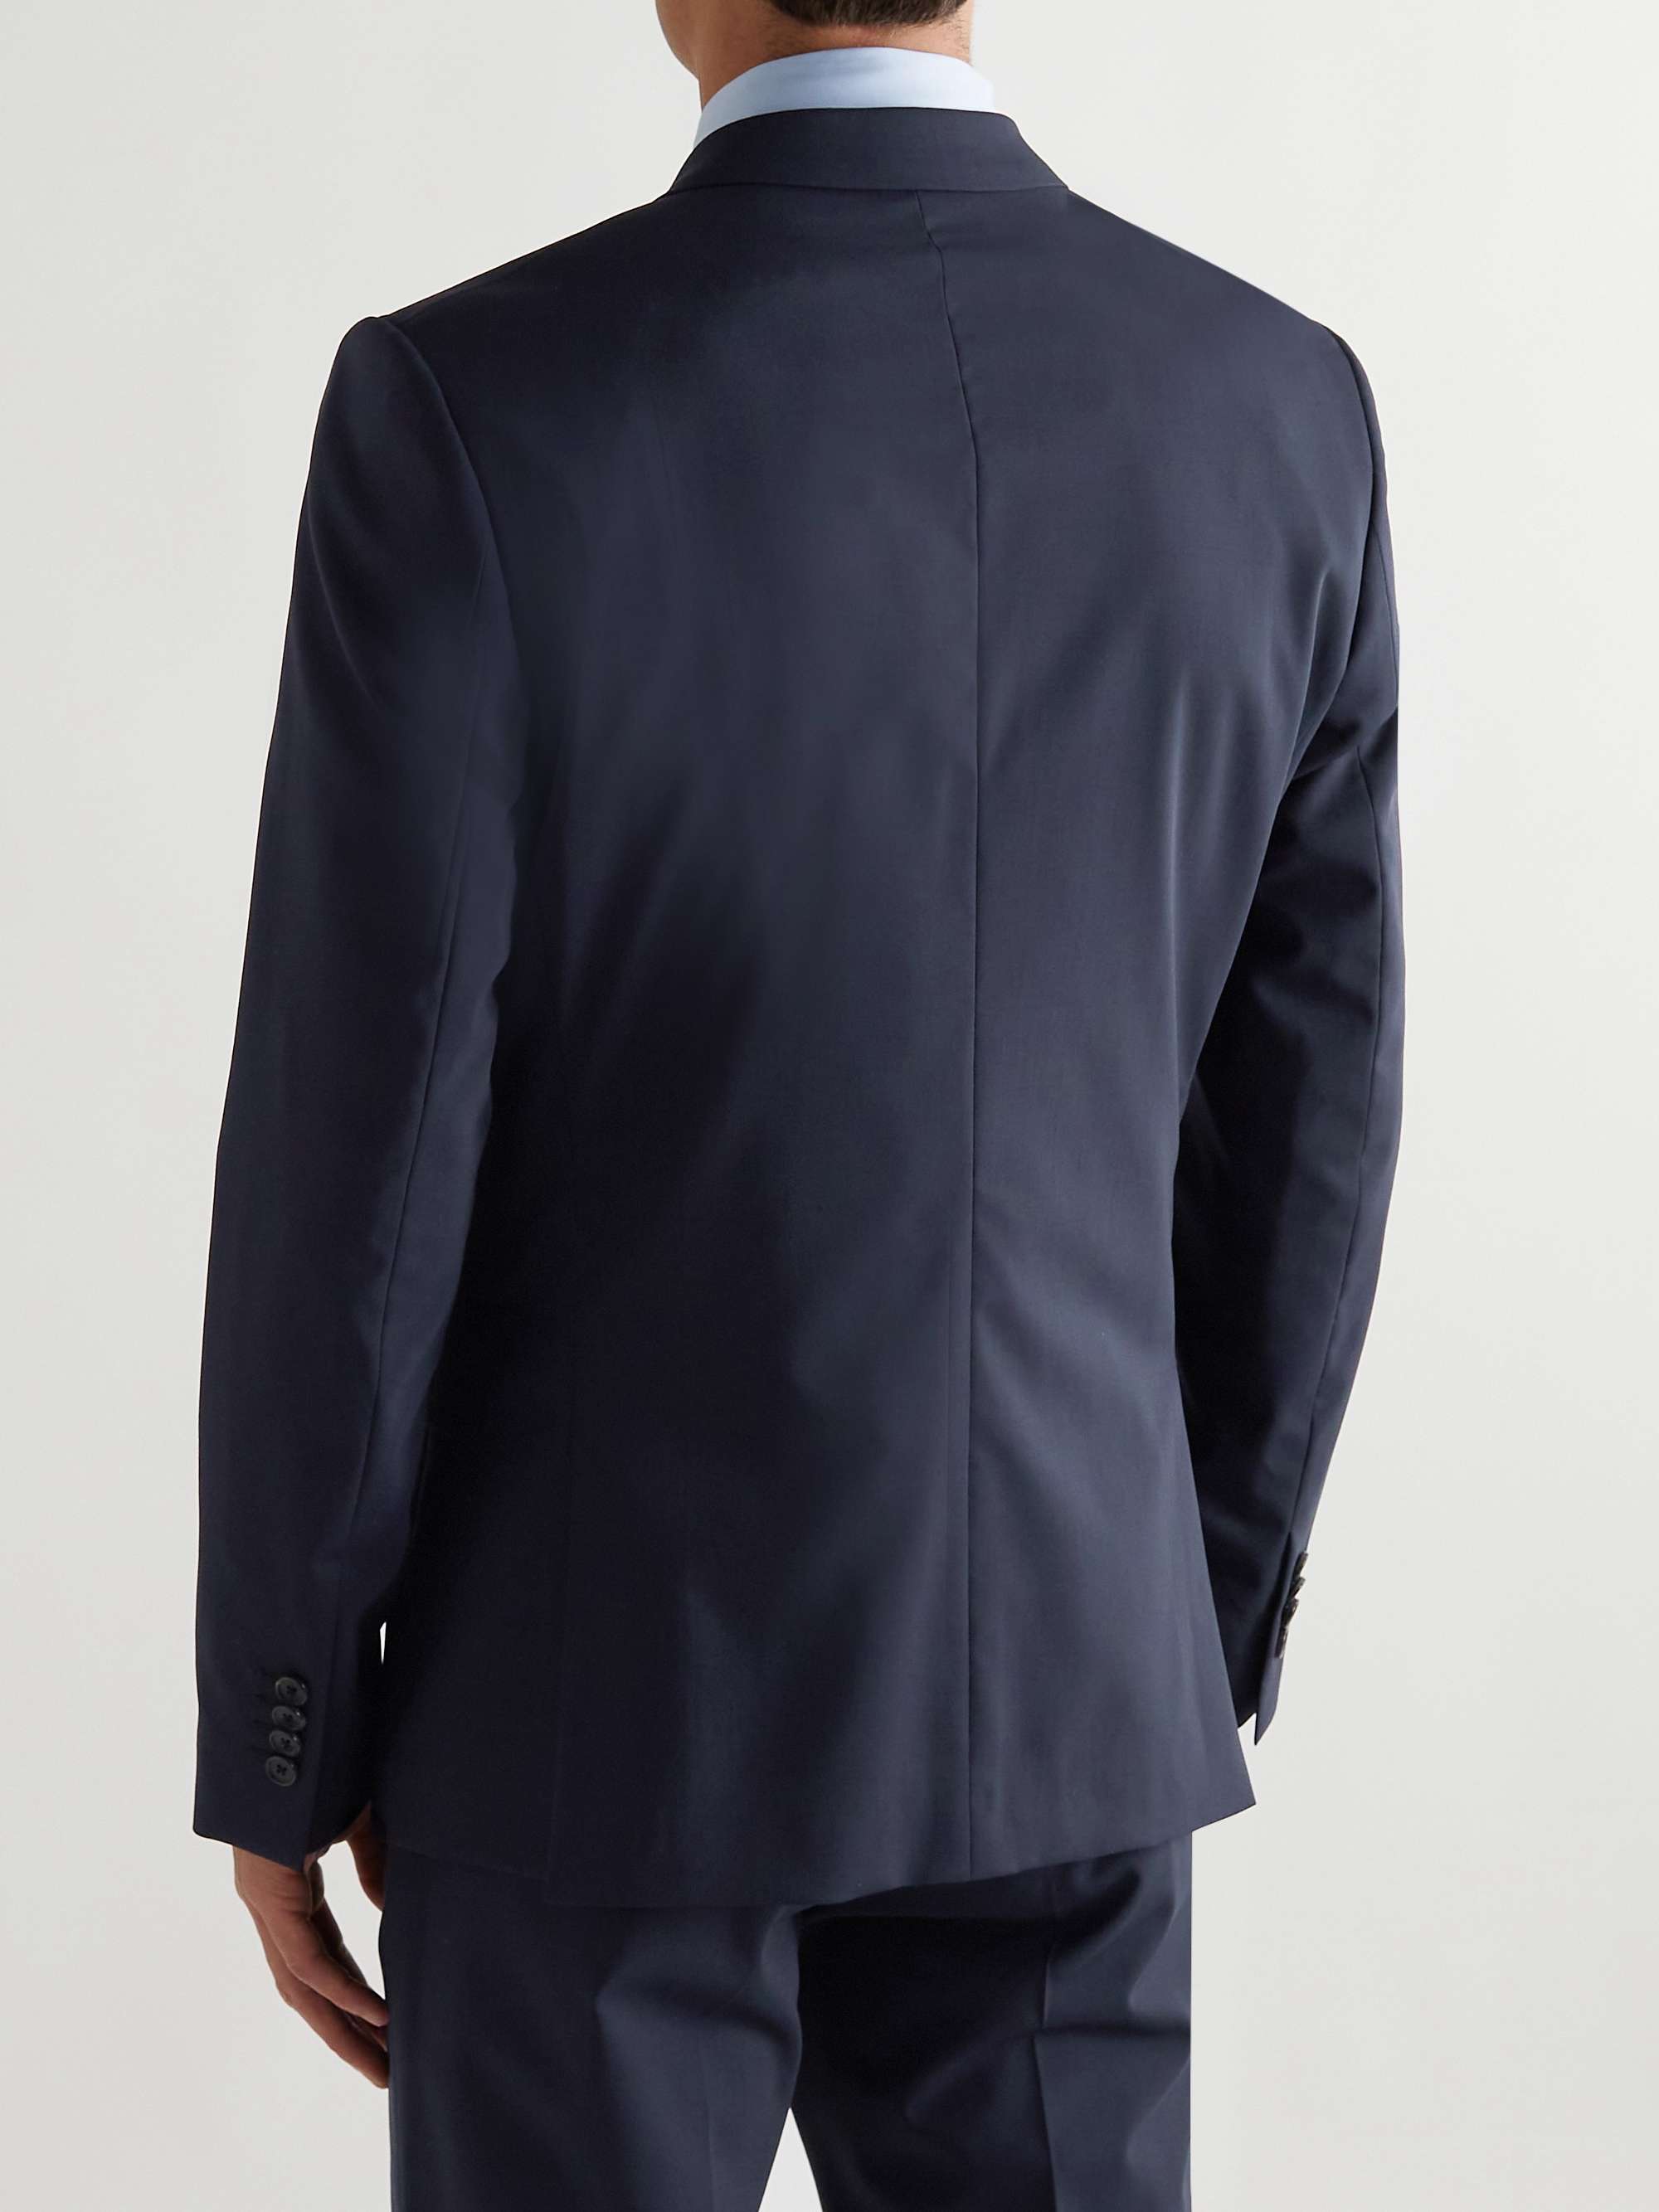 PAUL SMITH Slim-Fit Stretch-Wool Suit Jacket | MR PORTER